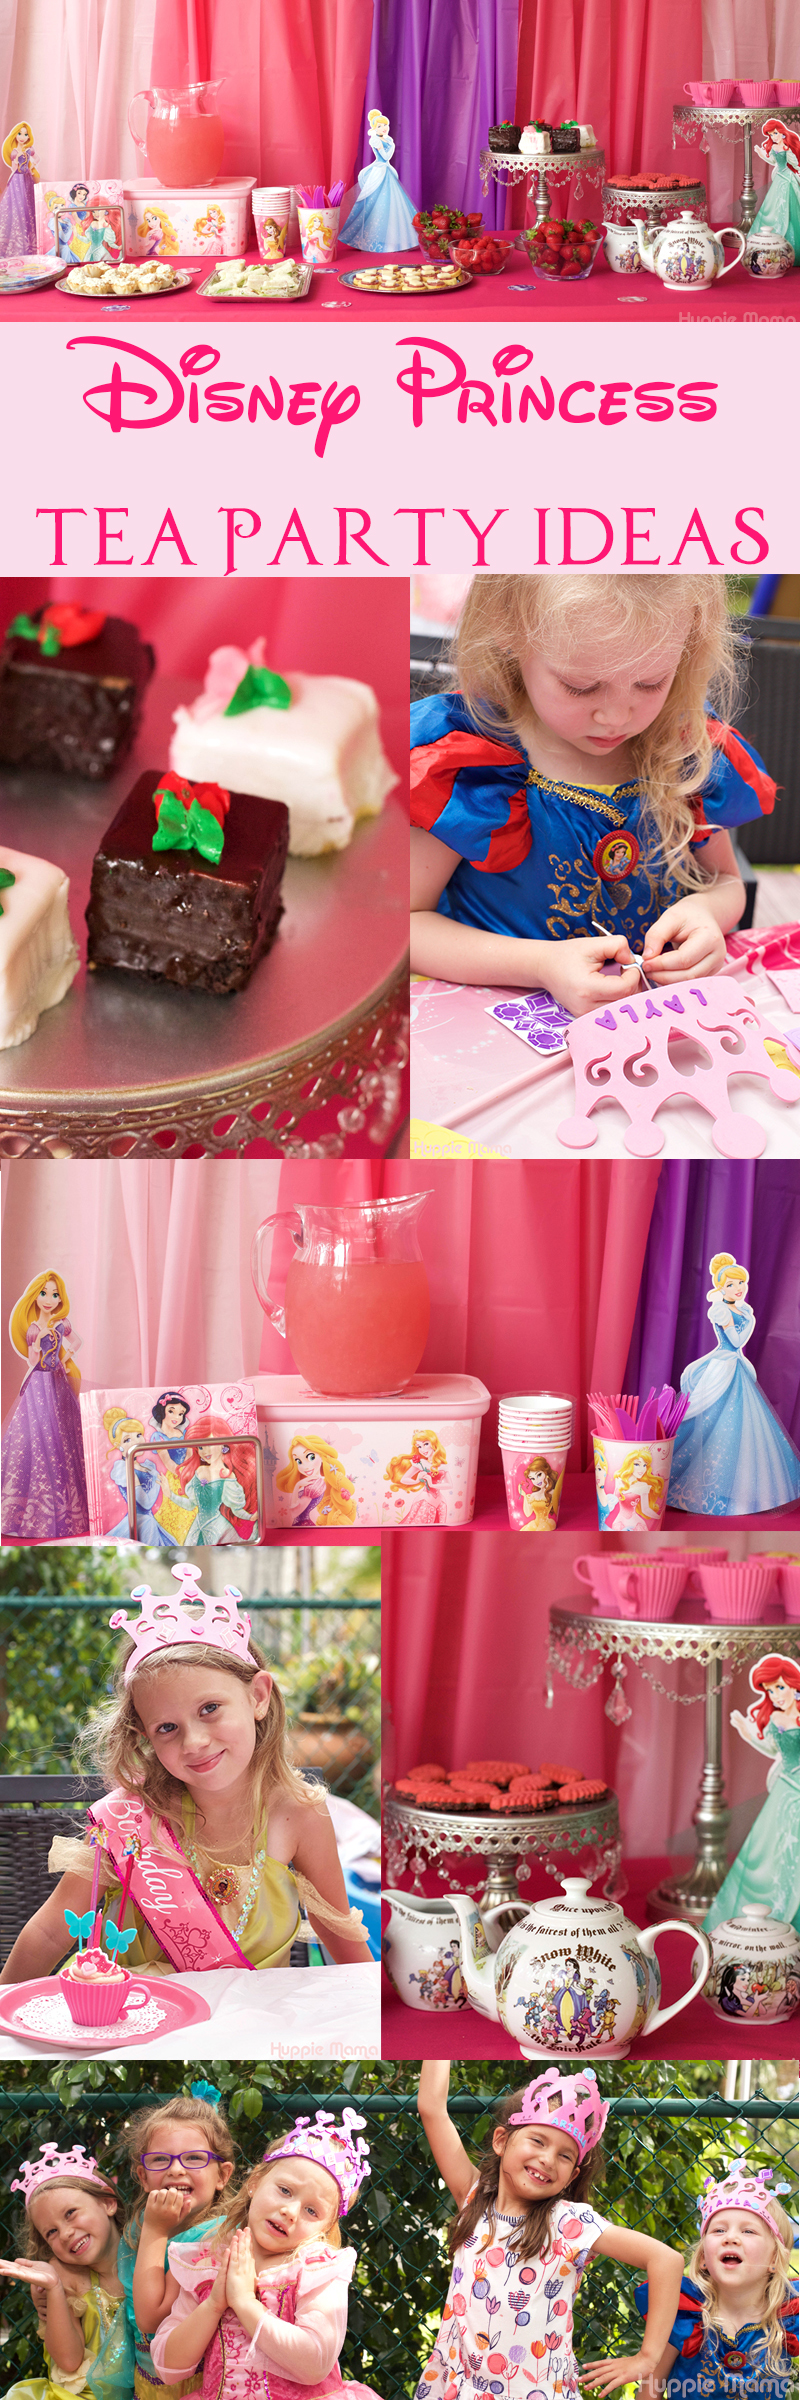 Disney Princess Tea Party ideas